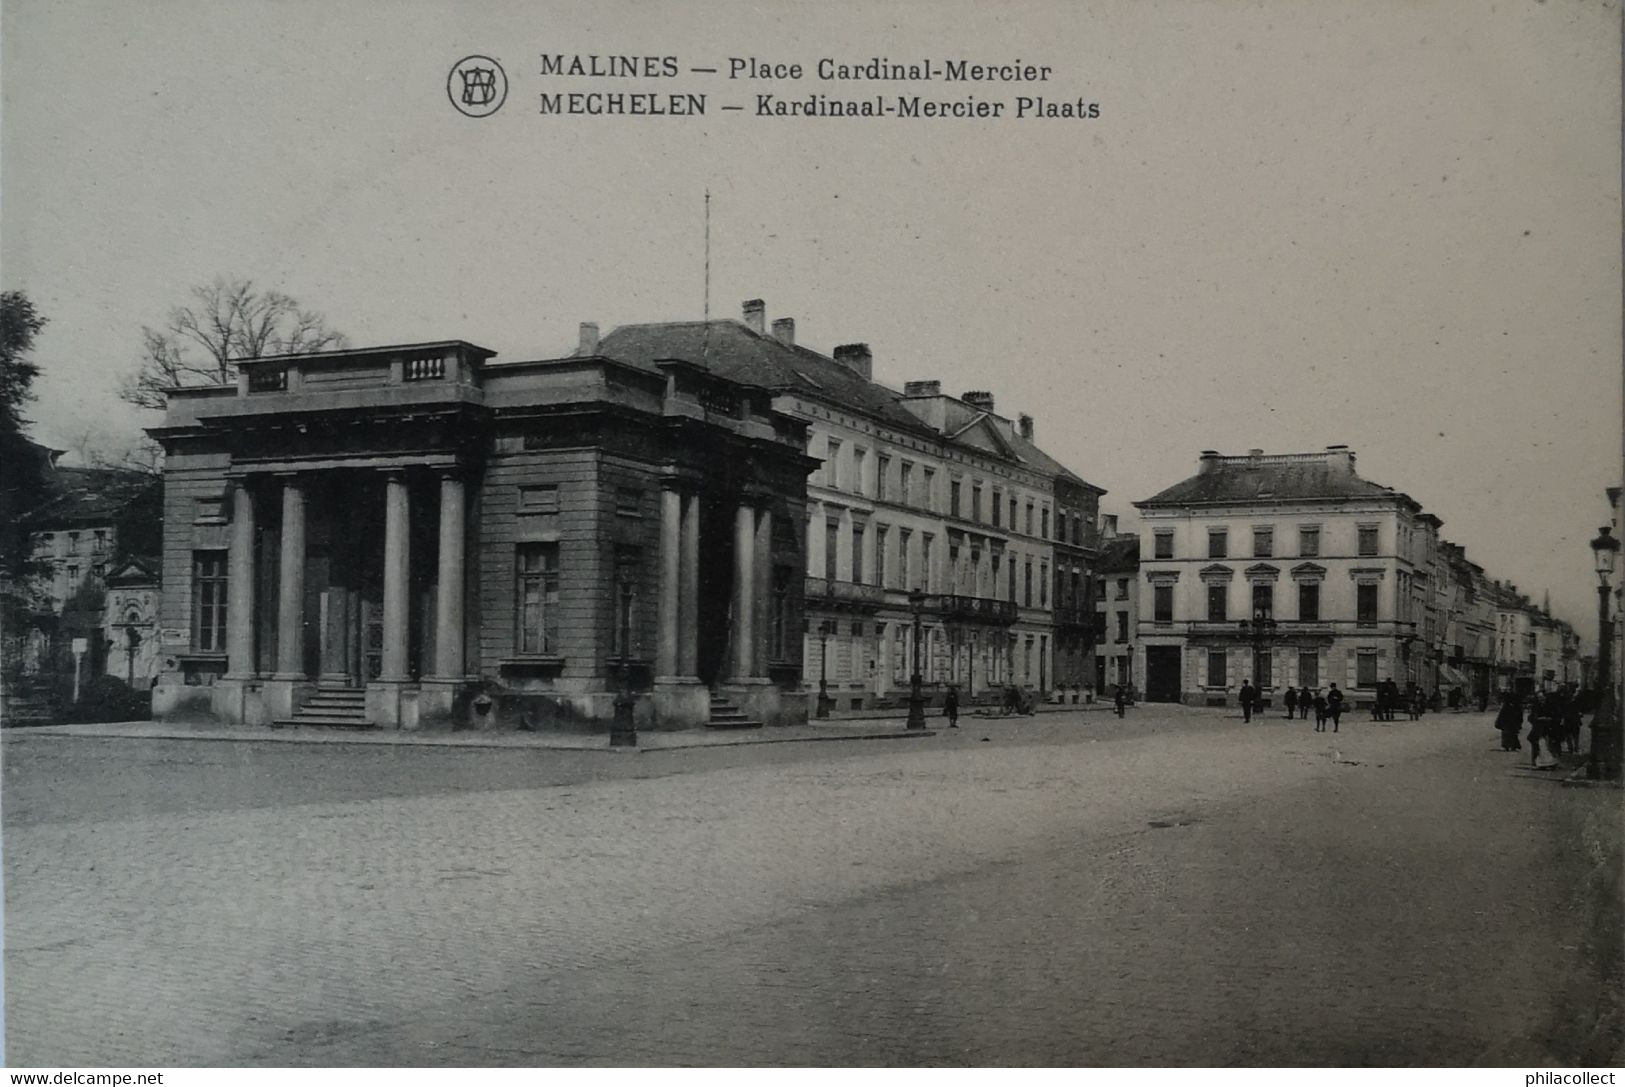 Mechelen - Malines / Place Cardinal Mercier 19?? - Malines